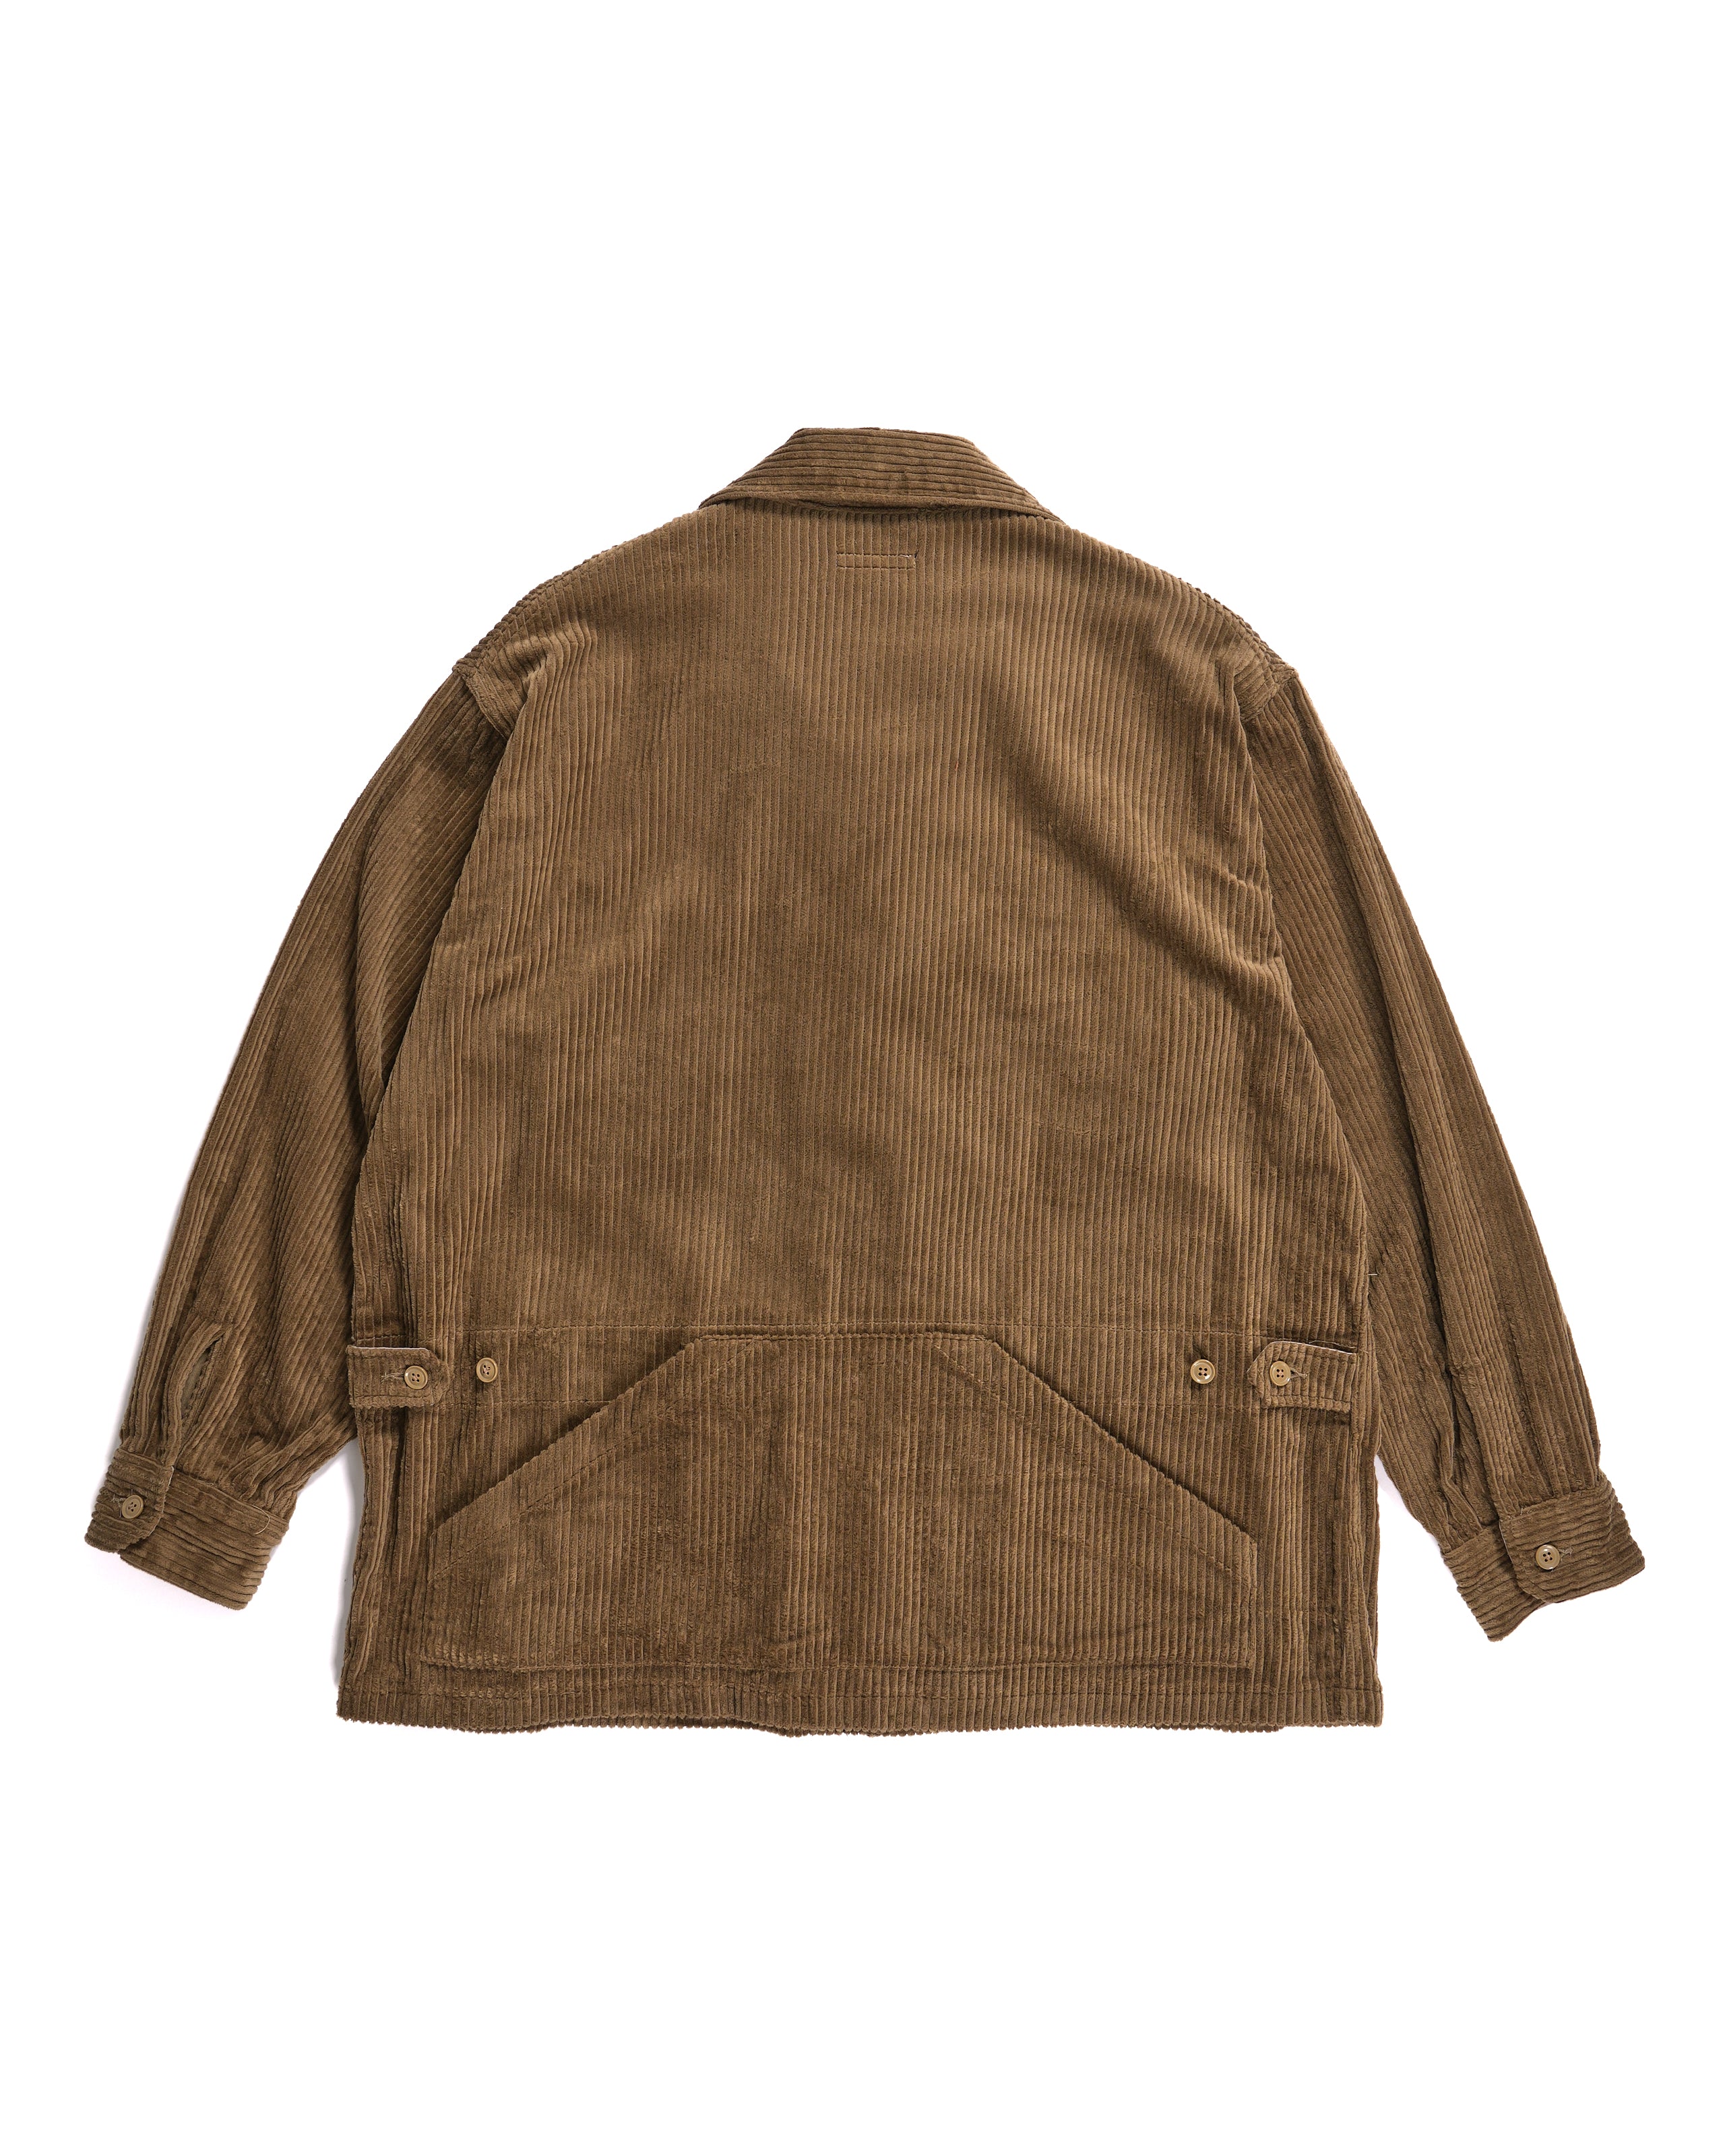 Suffolk Shirt Jacket - Khaki Cotton 4.5W Corduroy